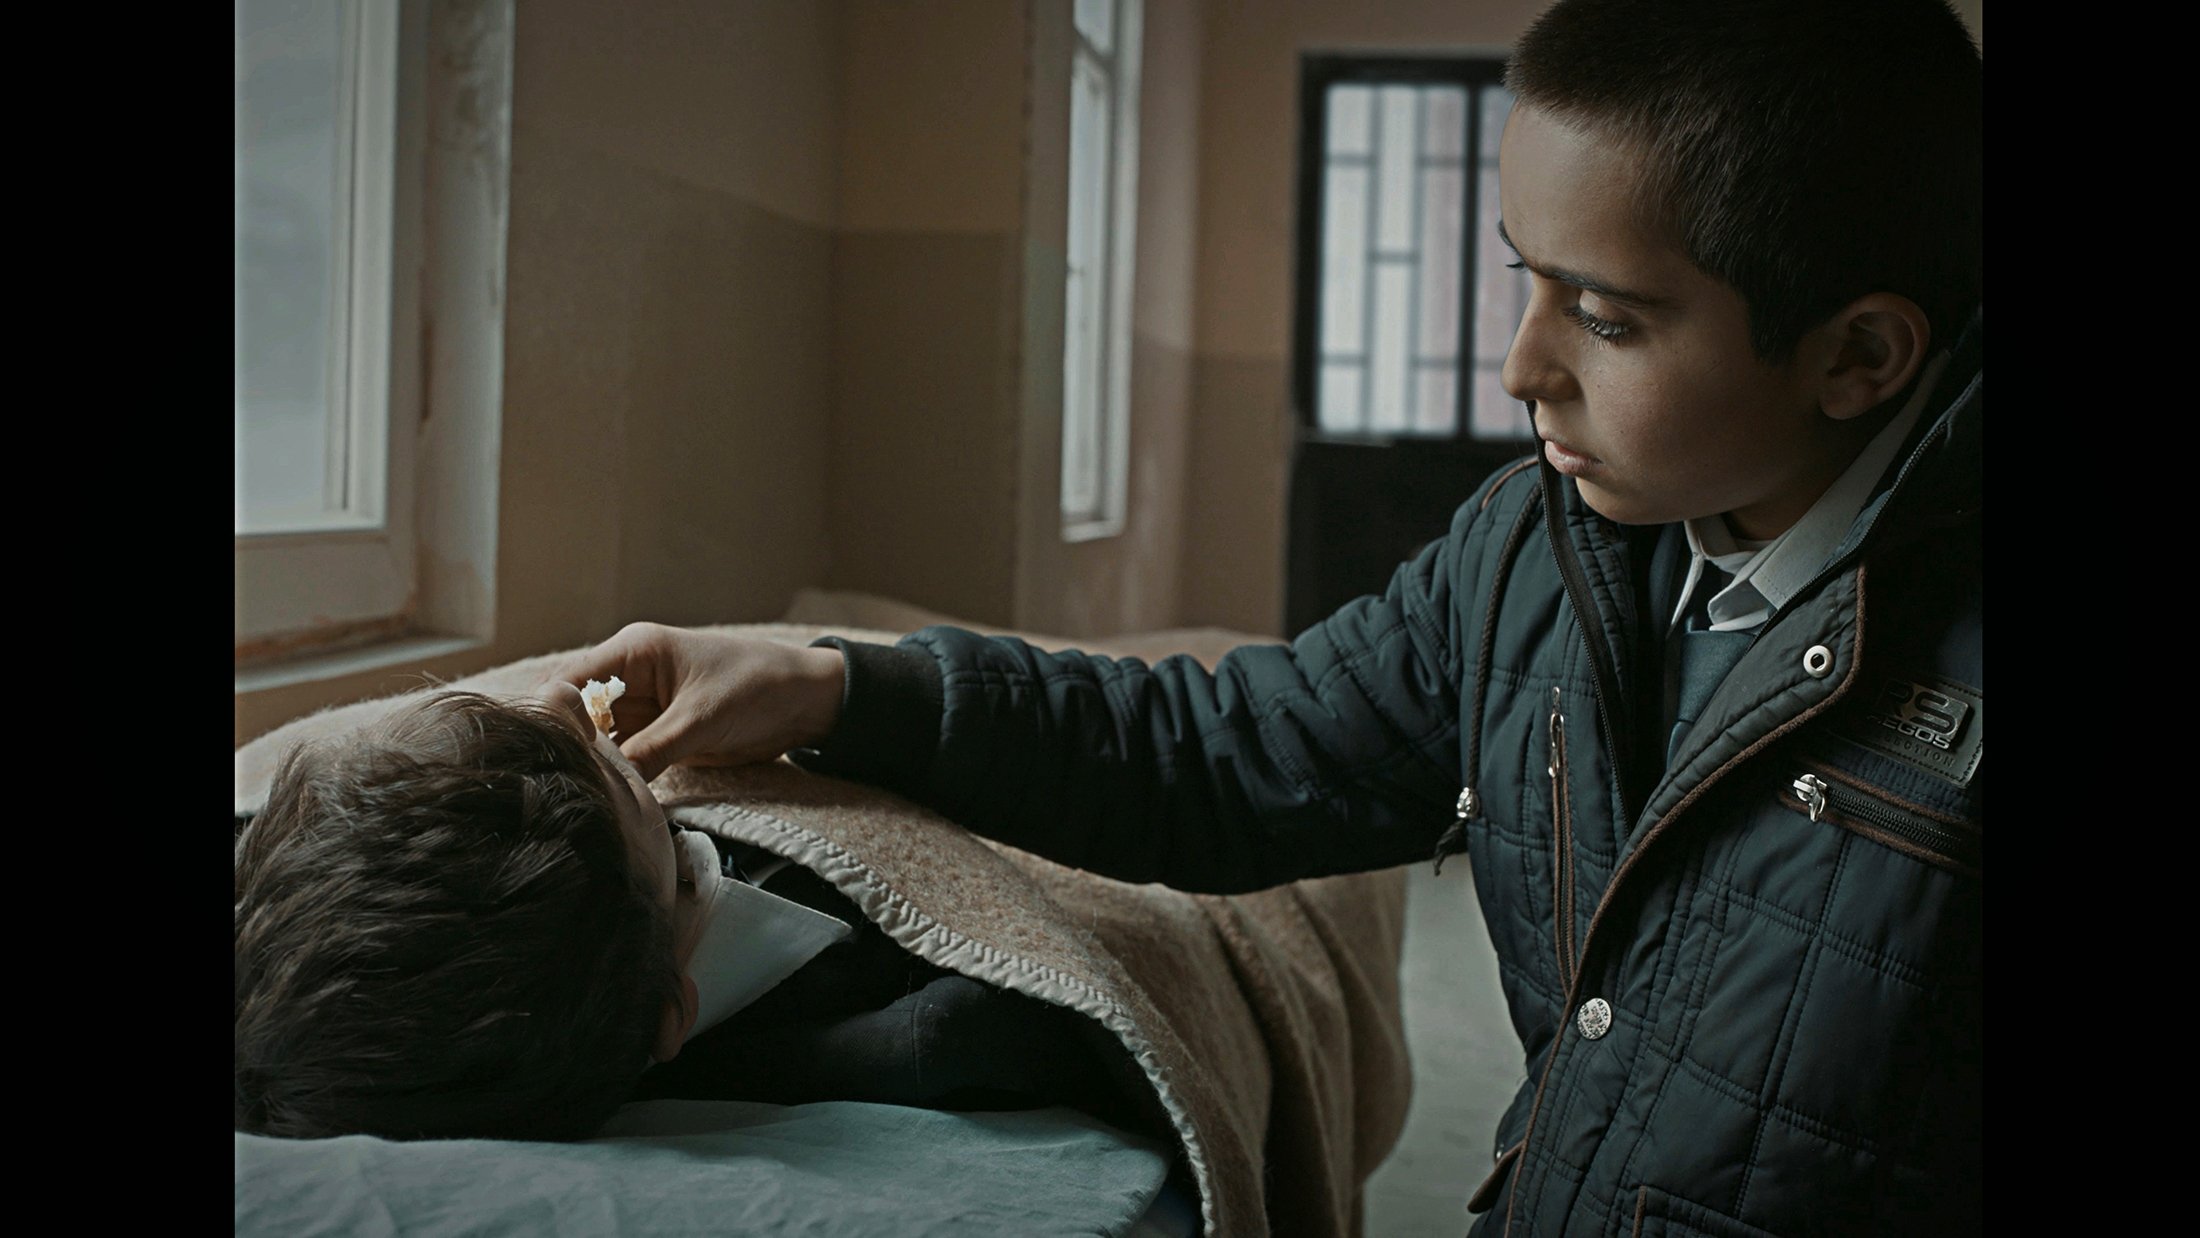 A still shot from the film "Okul Tıraşı" ("Brother